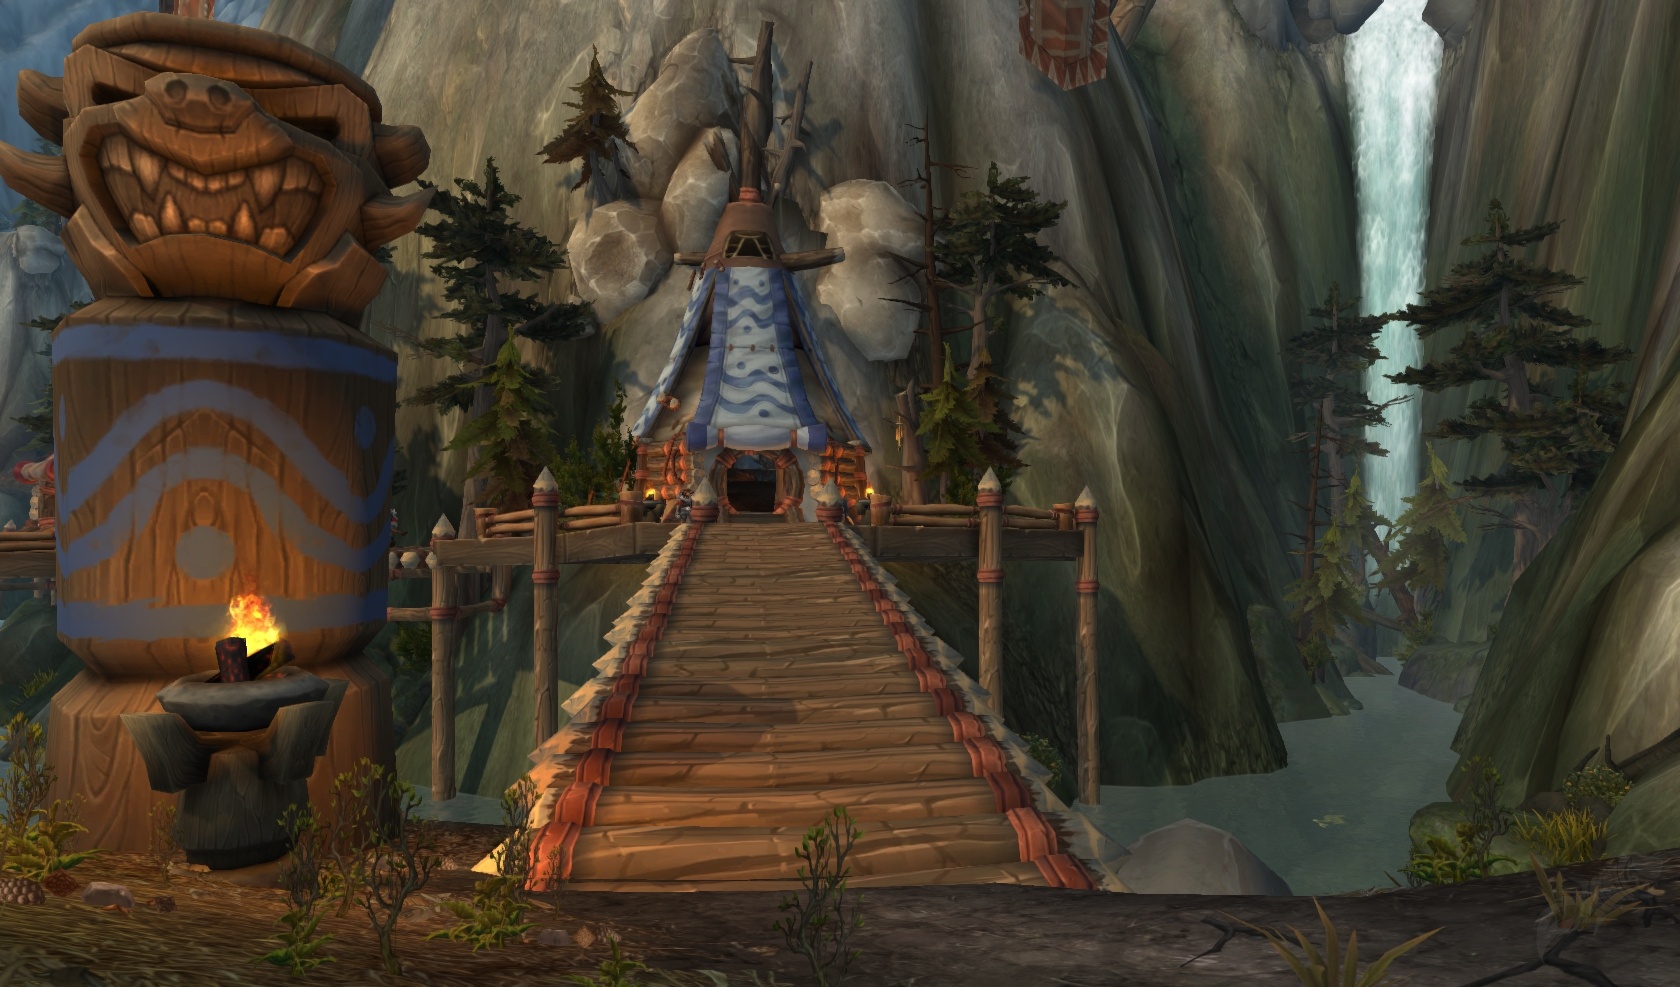 Get to High Ground - Quest - World of Warcraft